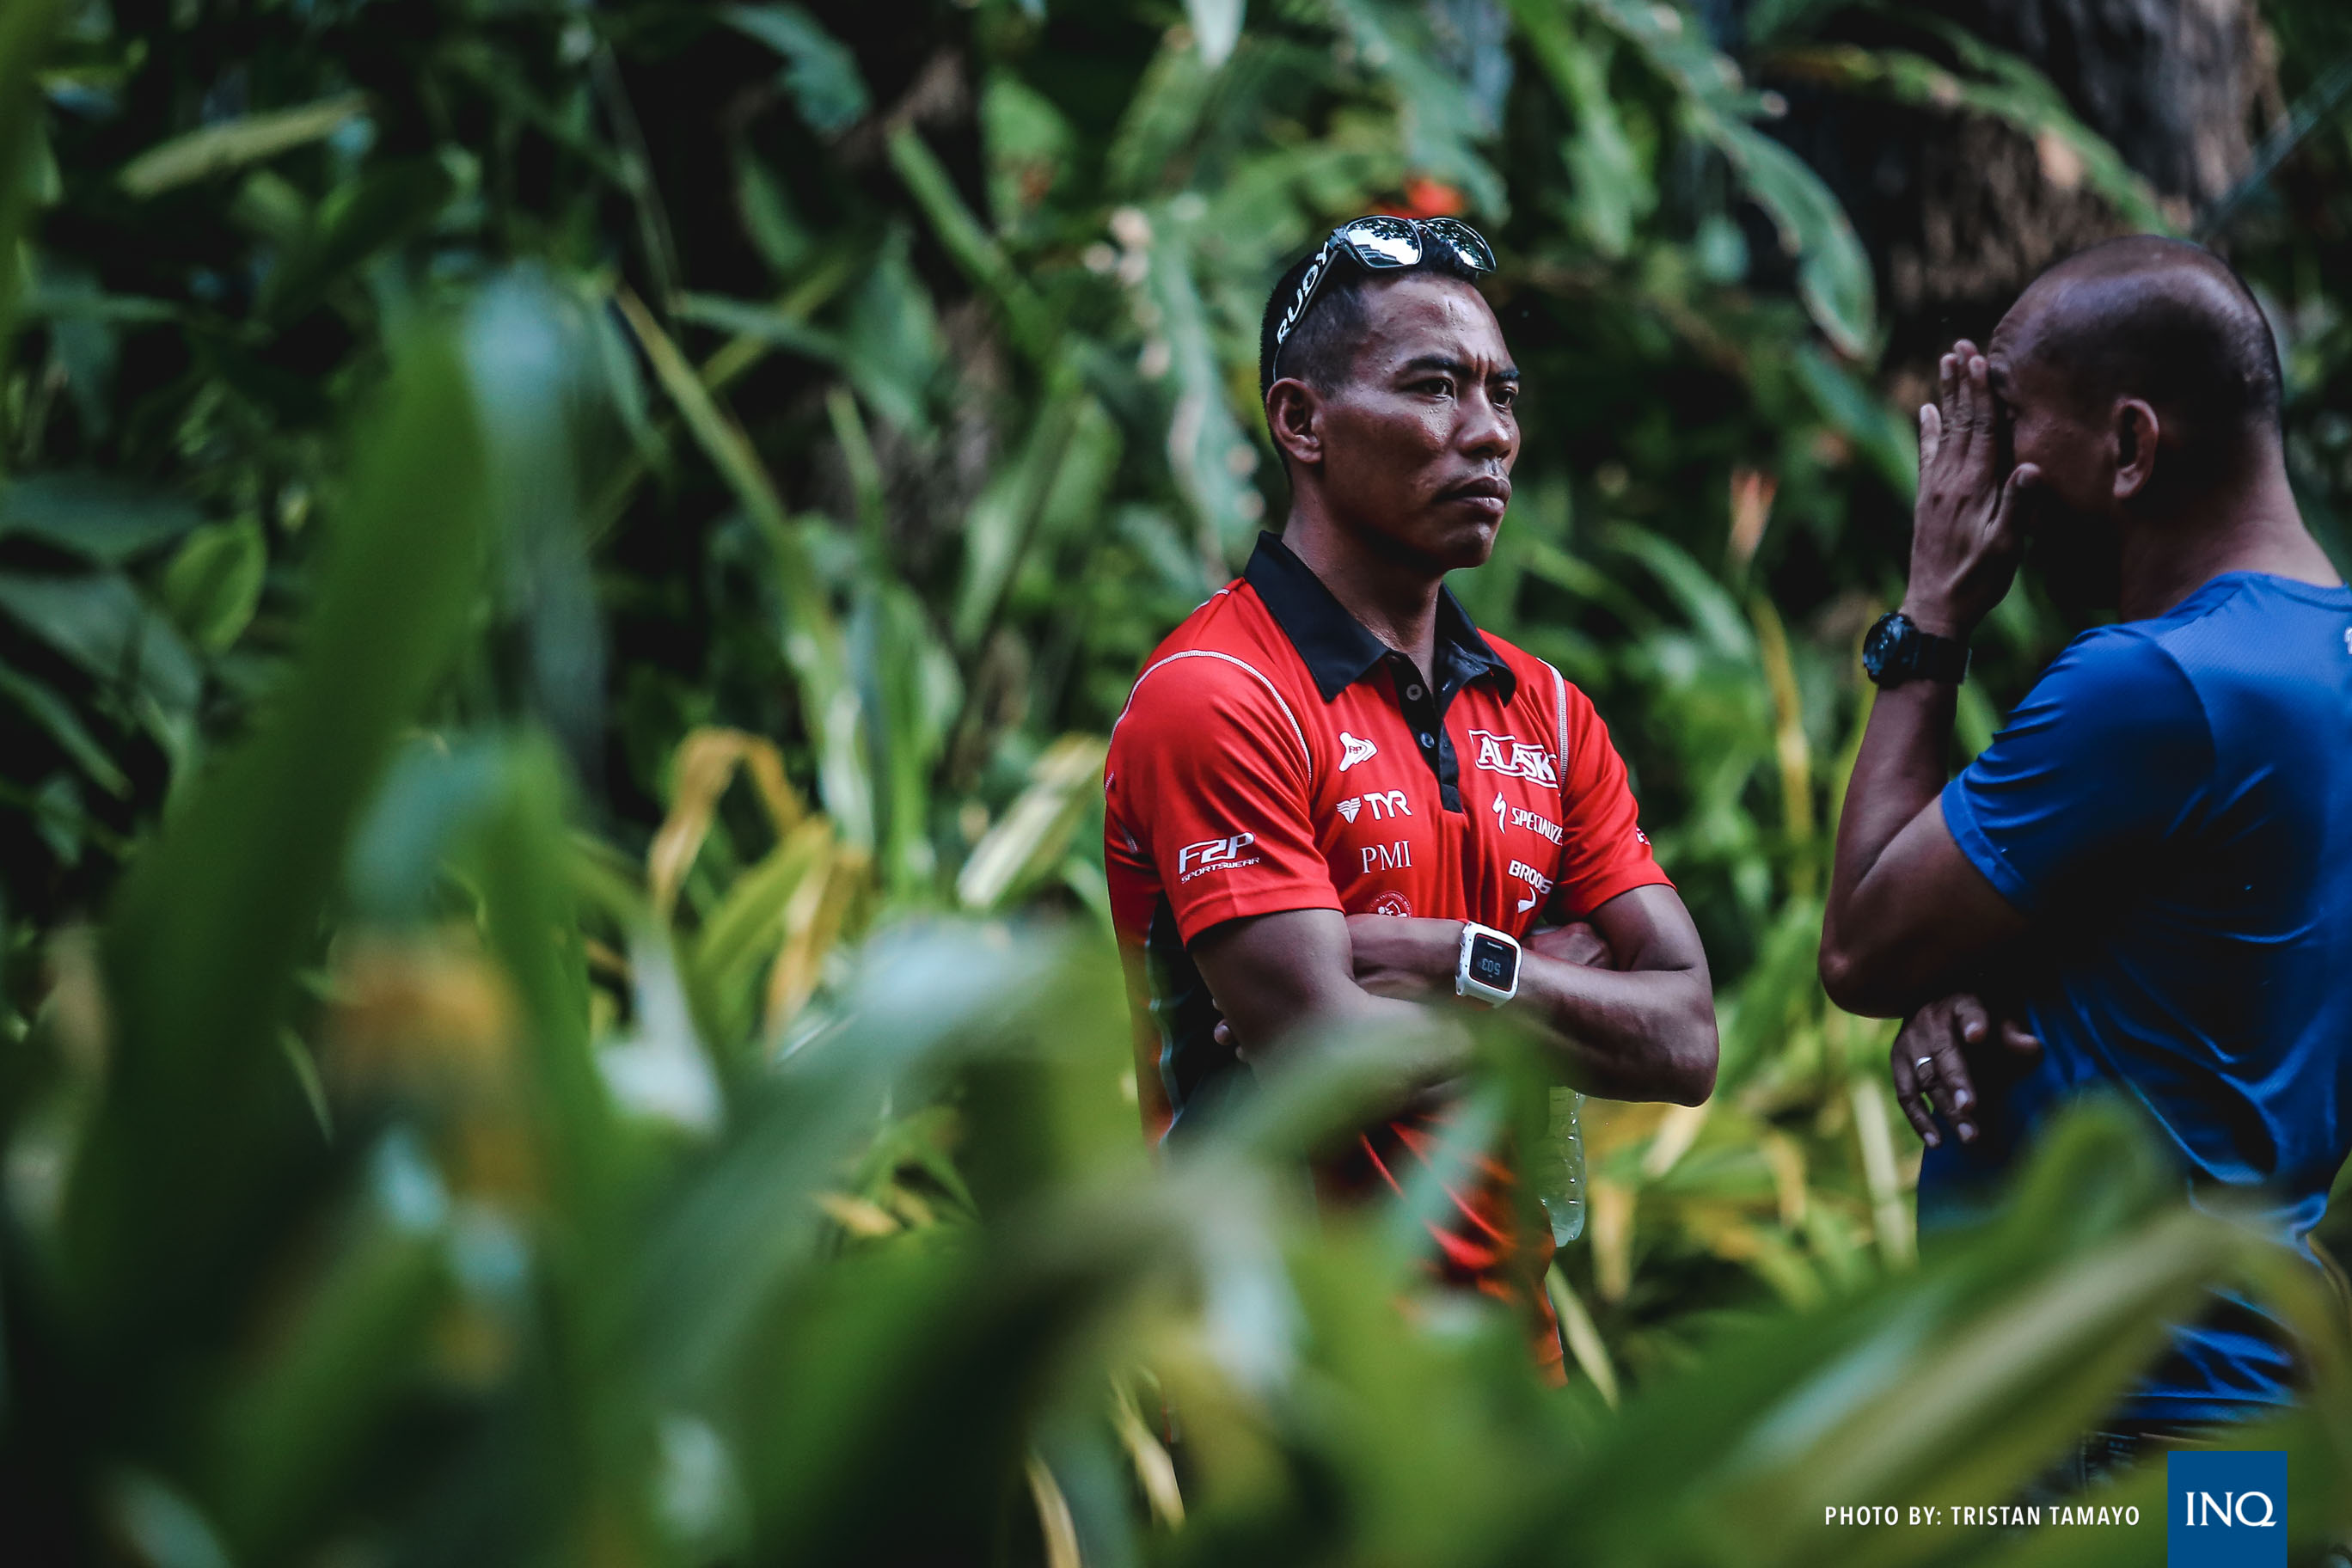 Filipino triathlete champ August Benedicto not resting on his laurels